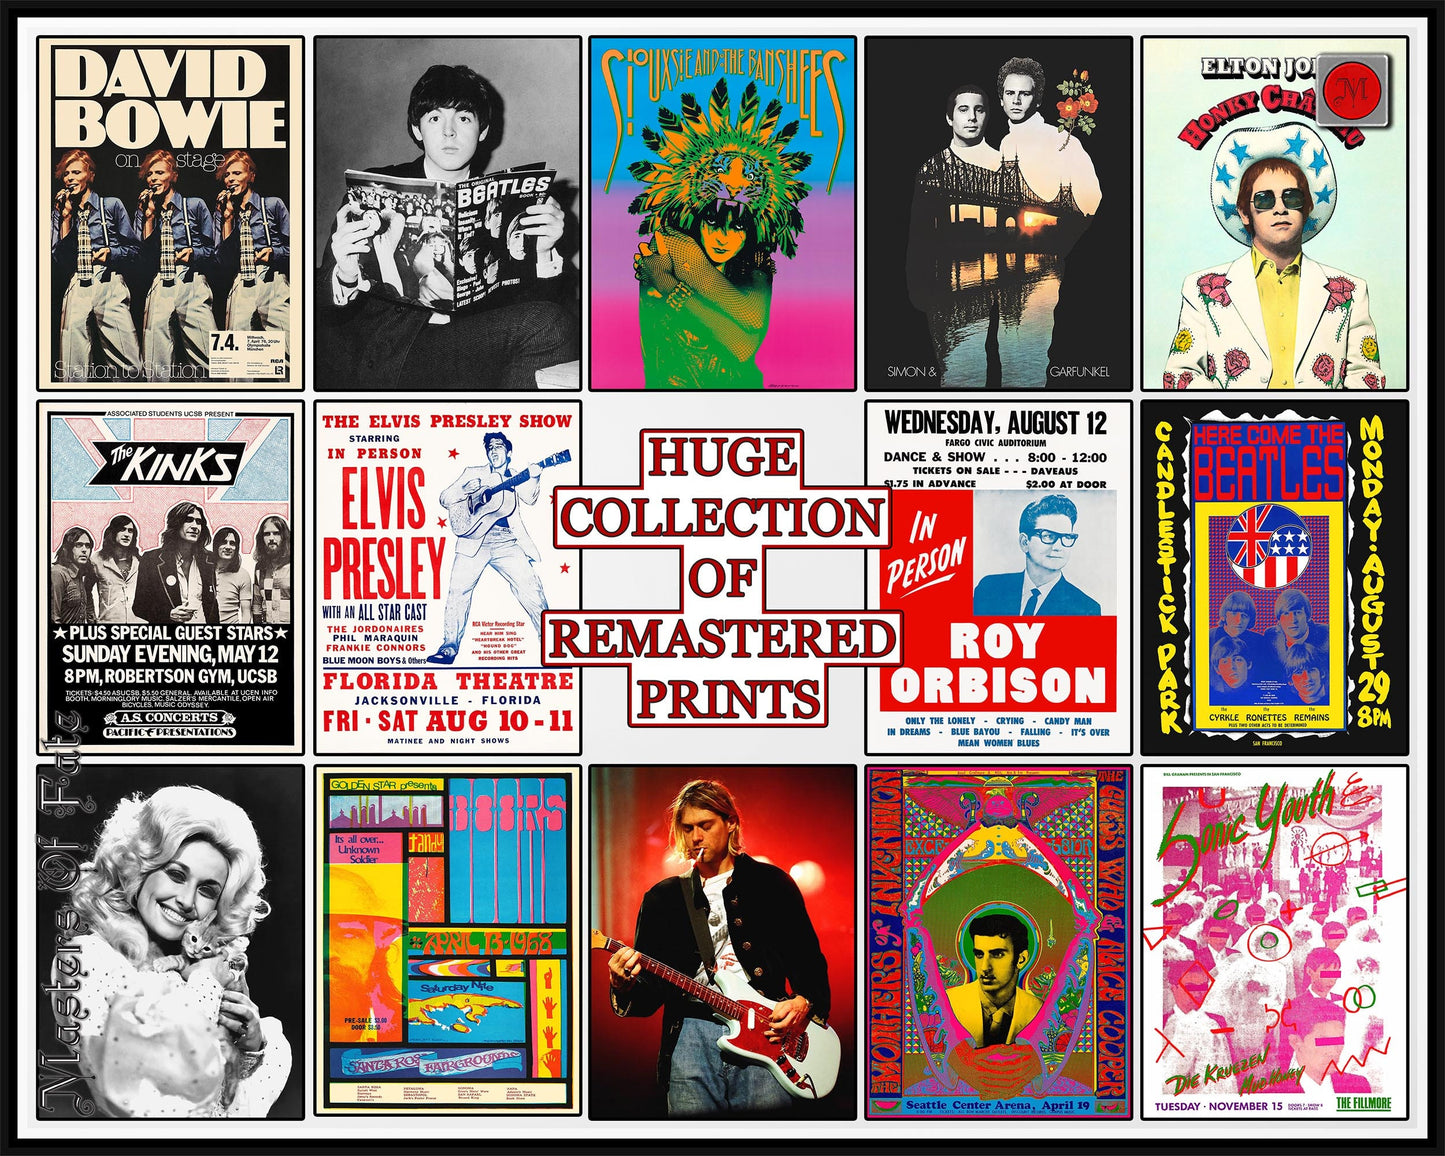 Chris Farley Bob Odenkirk Comedians SNL Poster Print REMASTERED